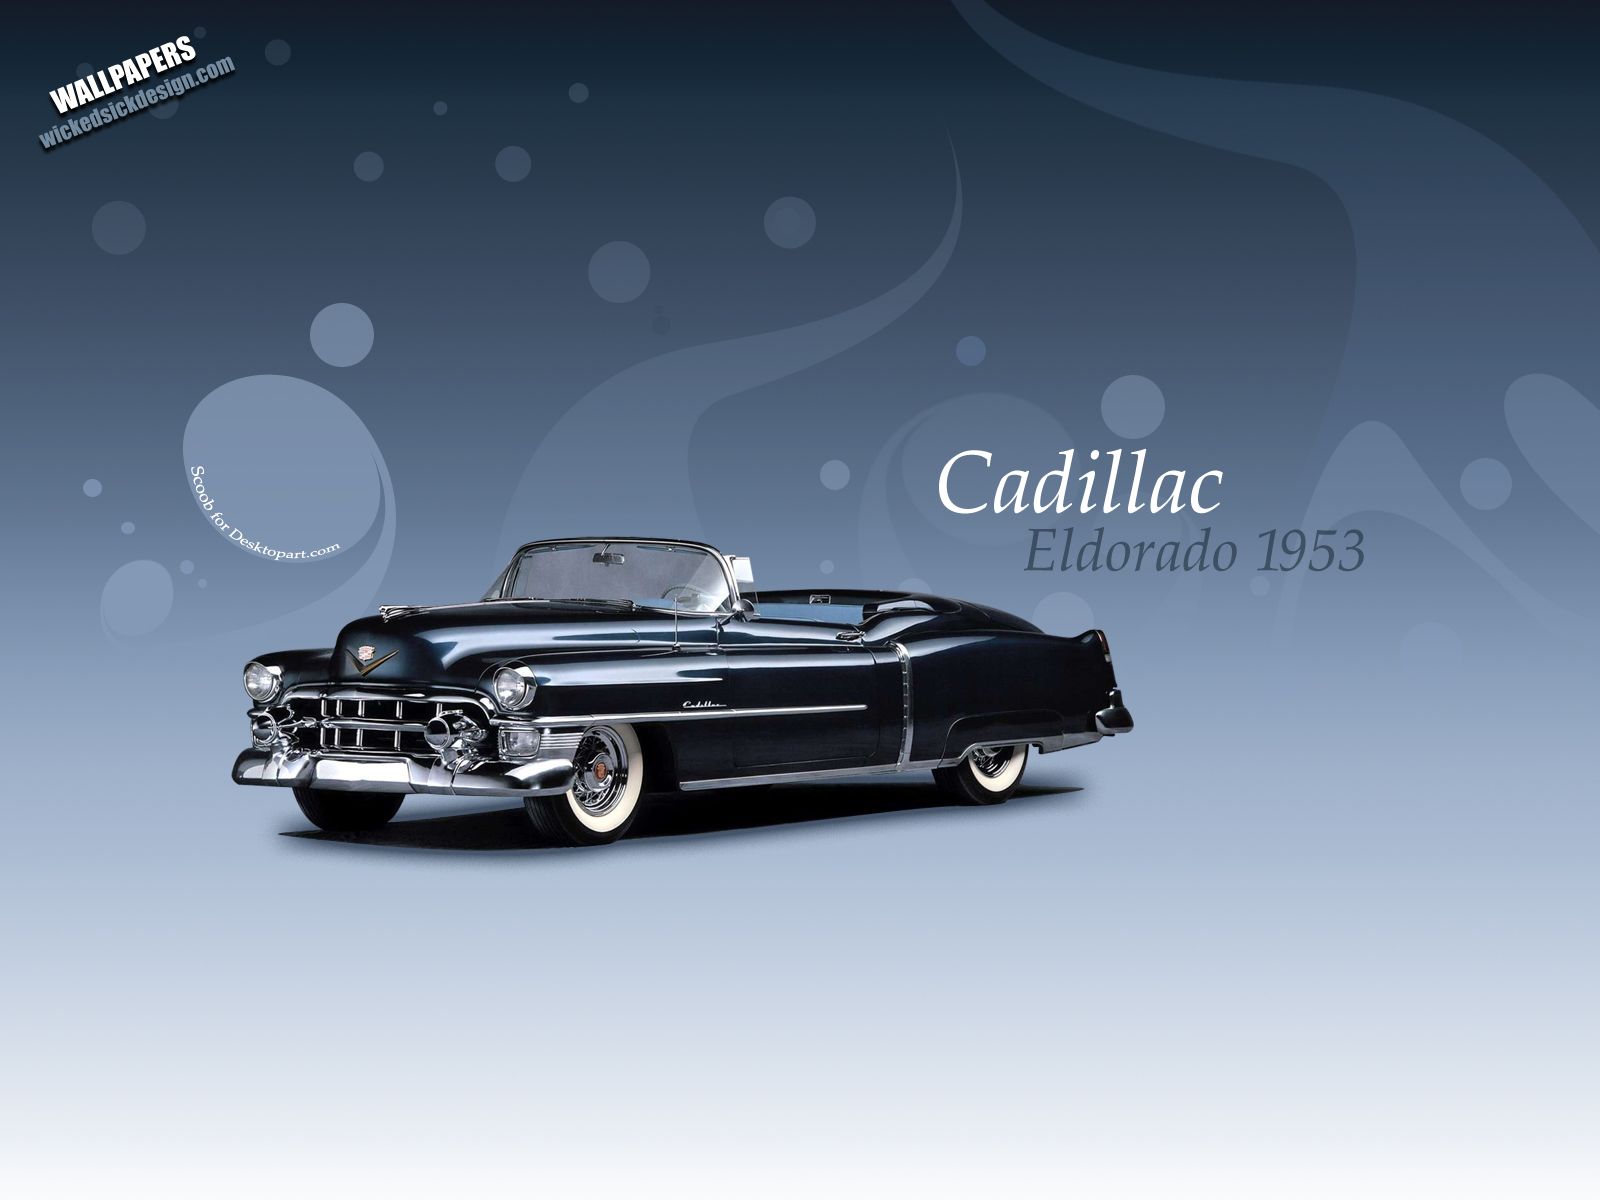 Cadillac-Eldorado HD Wallpaper | 1920x1080 | ID:46983